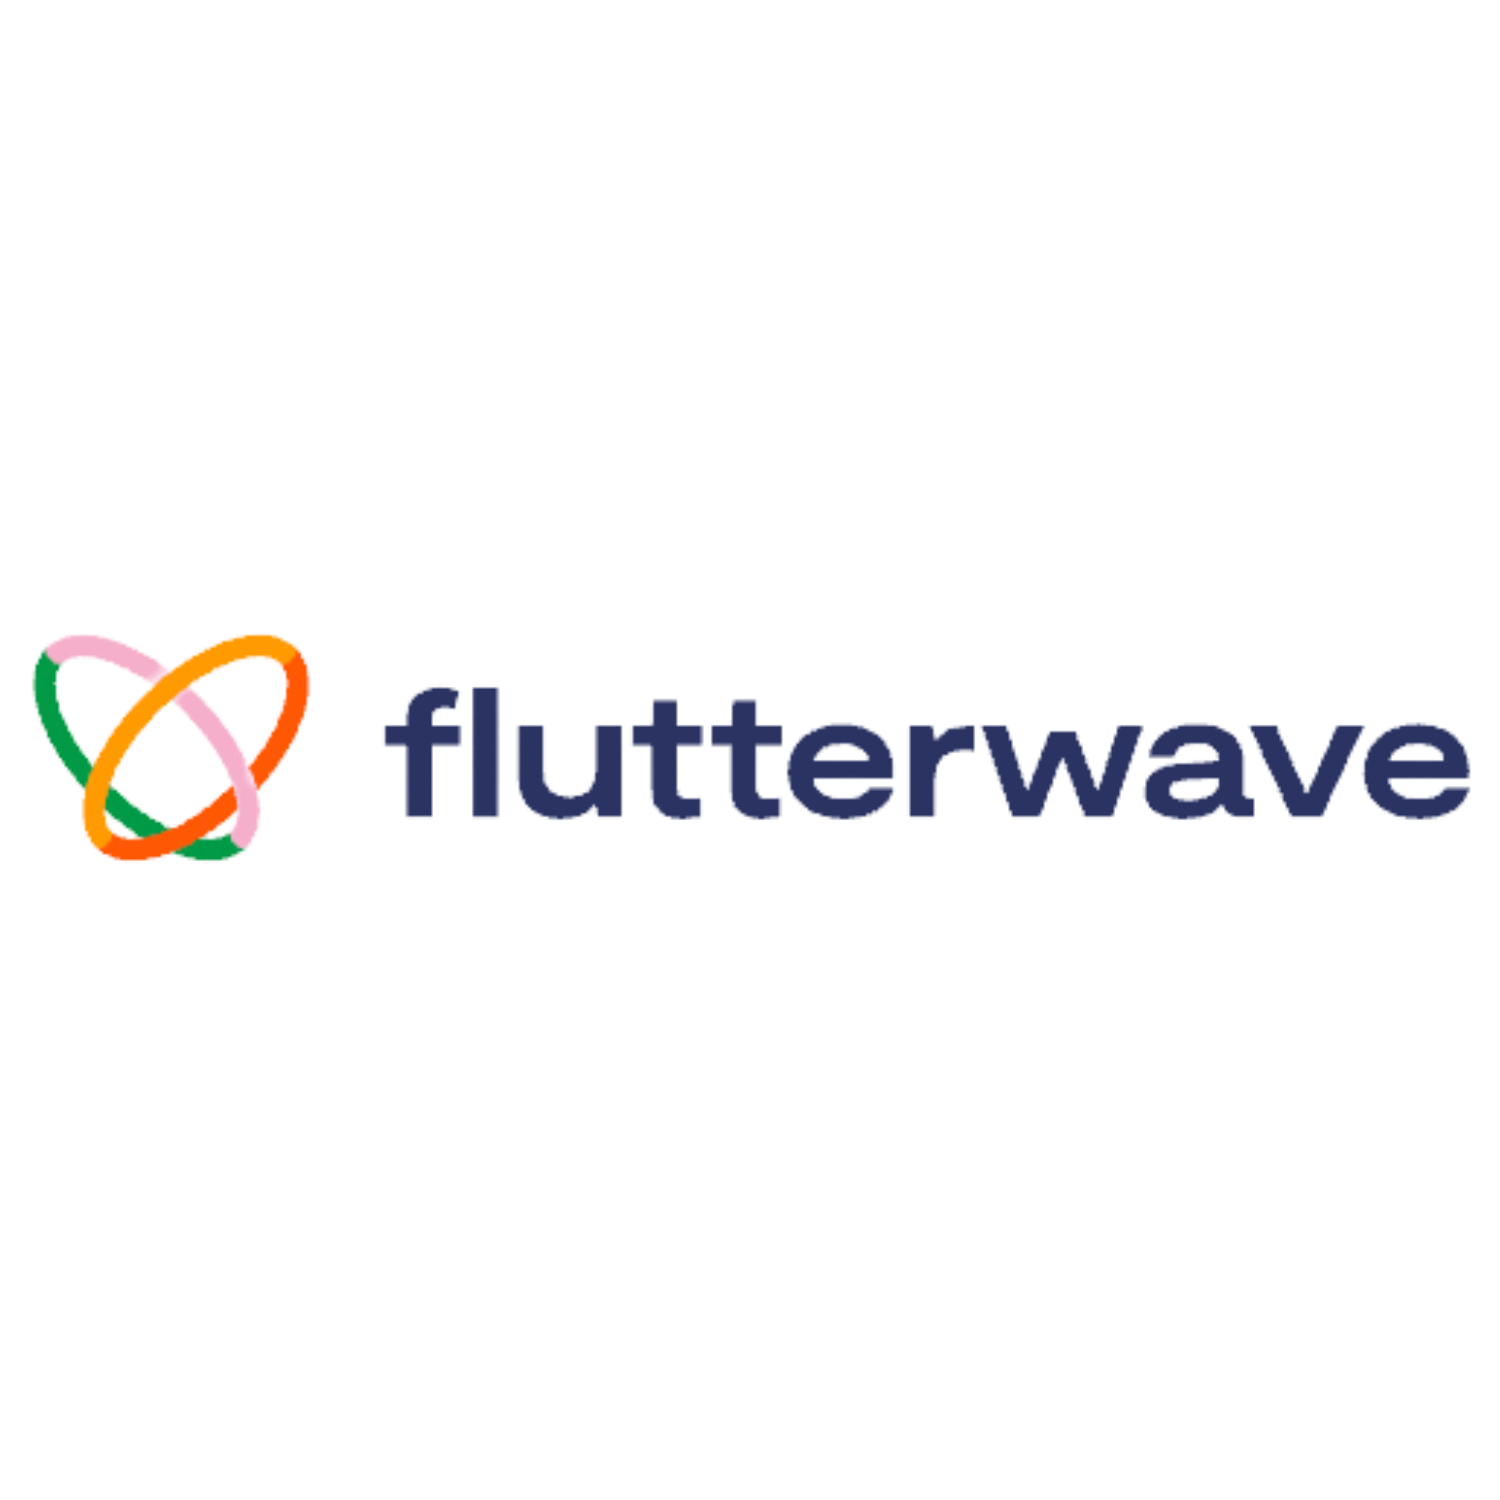 flutterwave, a leady fintech company